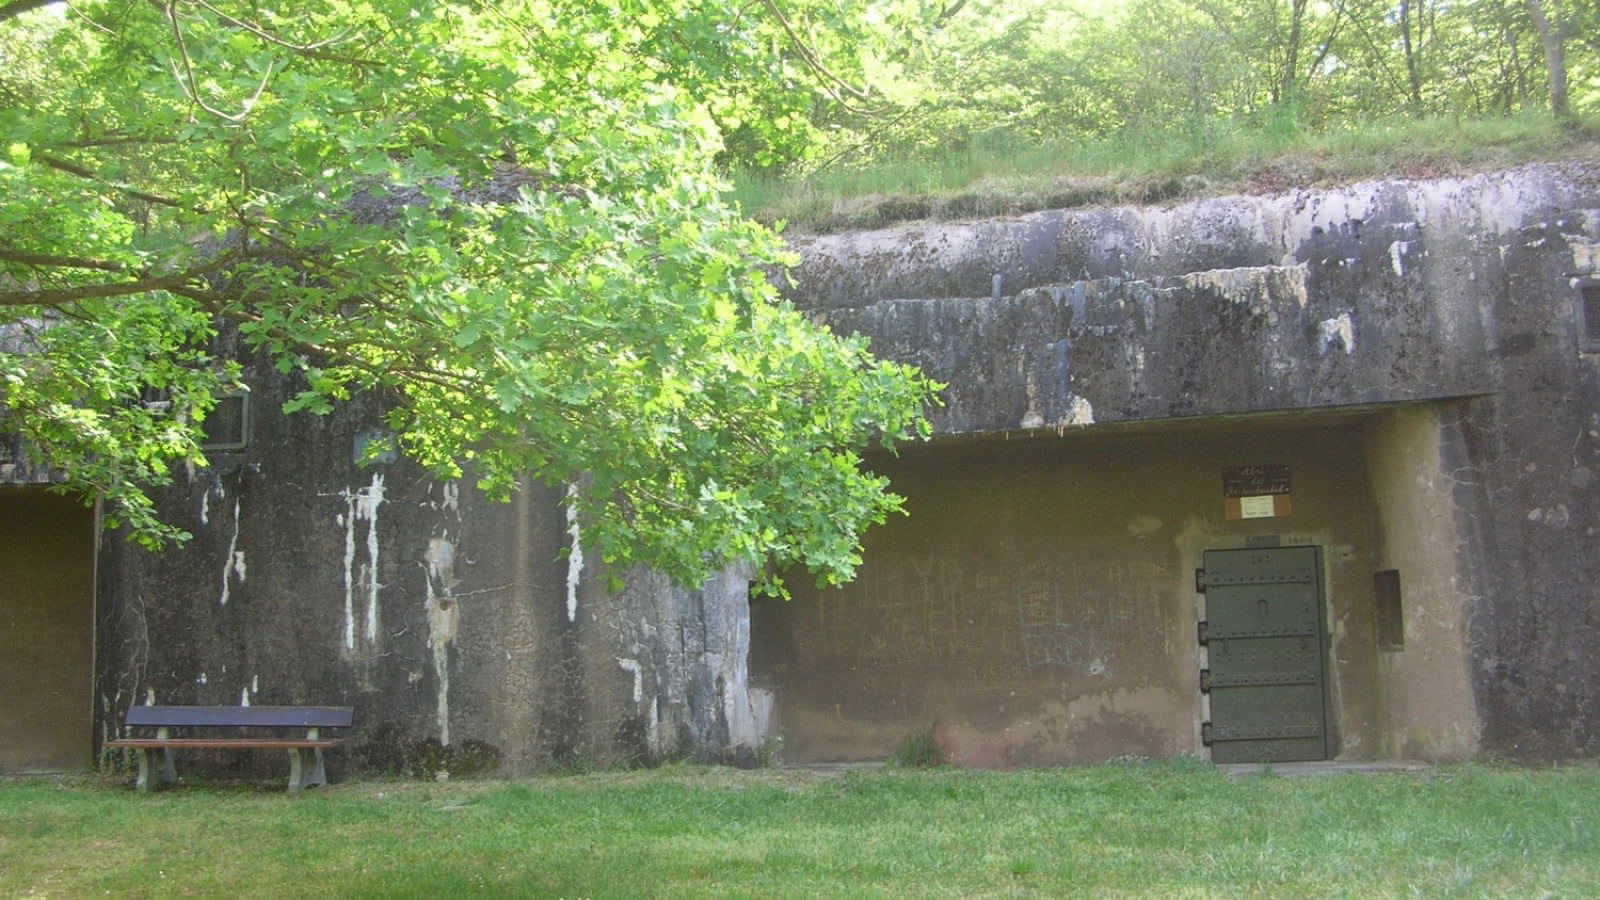 The Bunker 